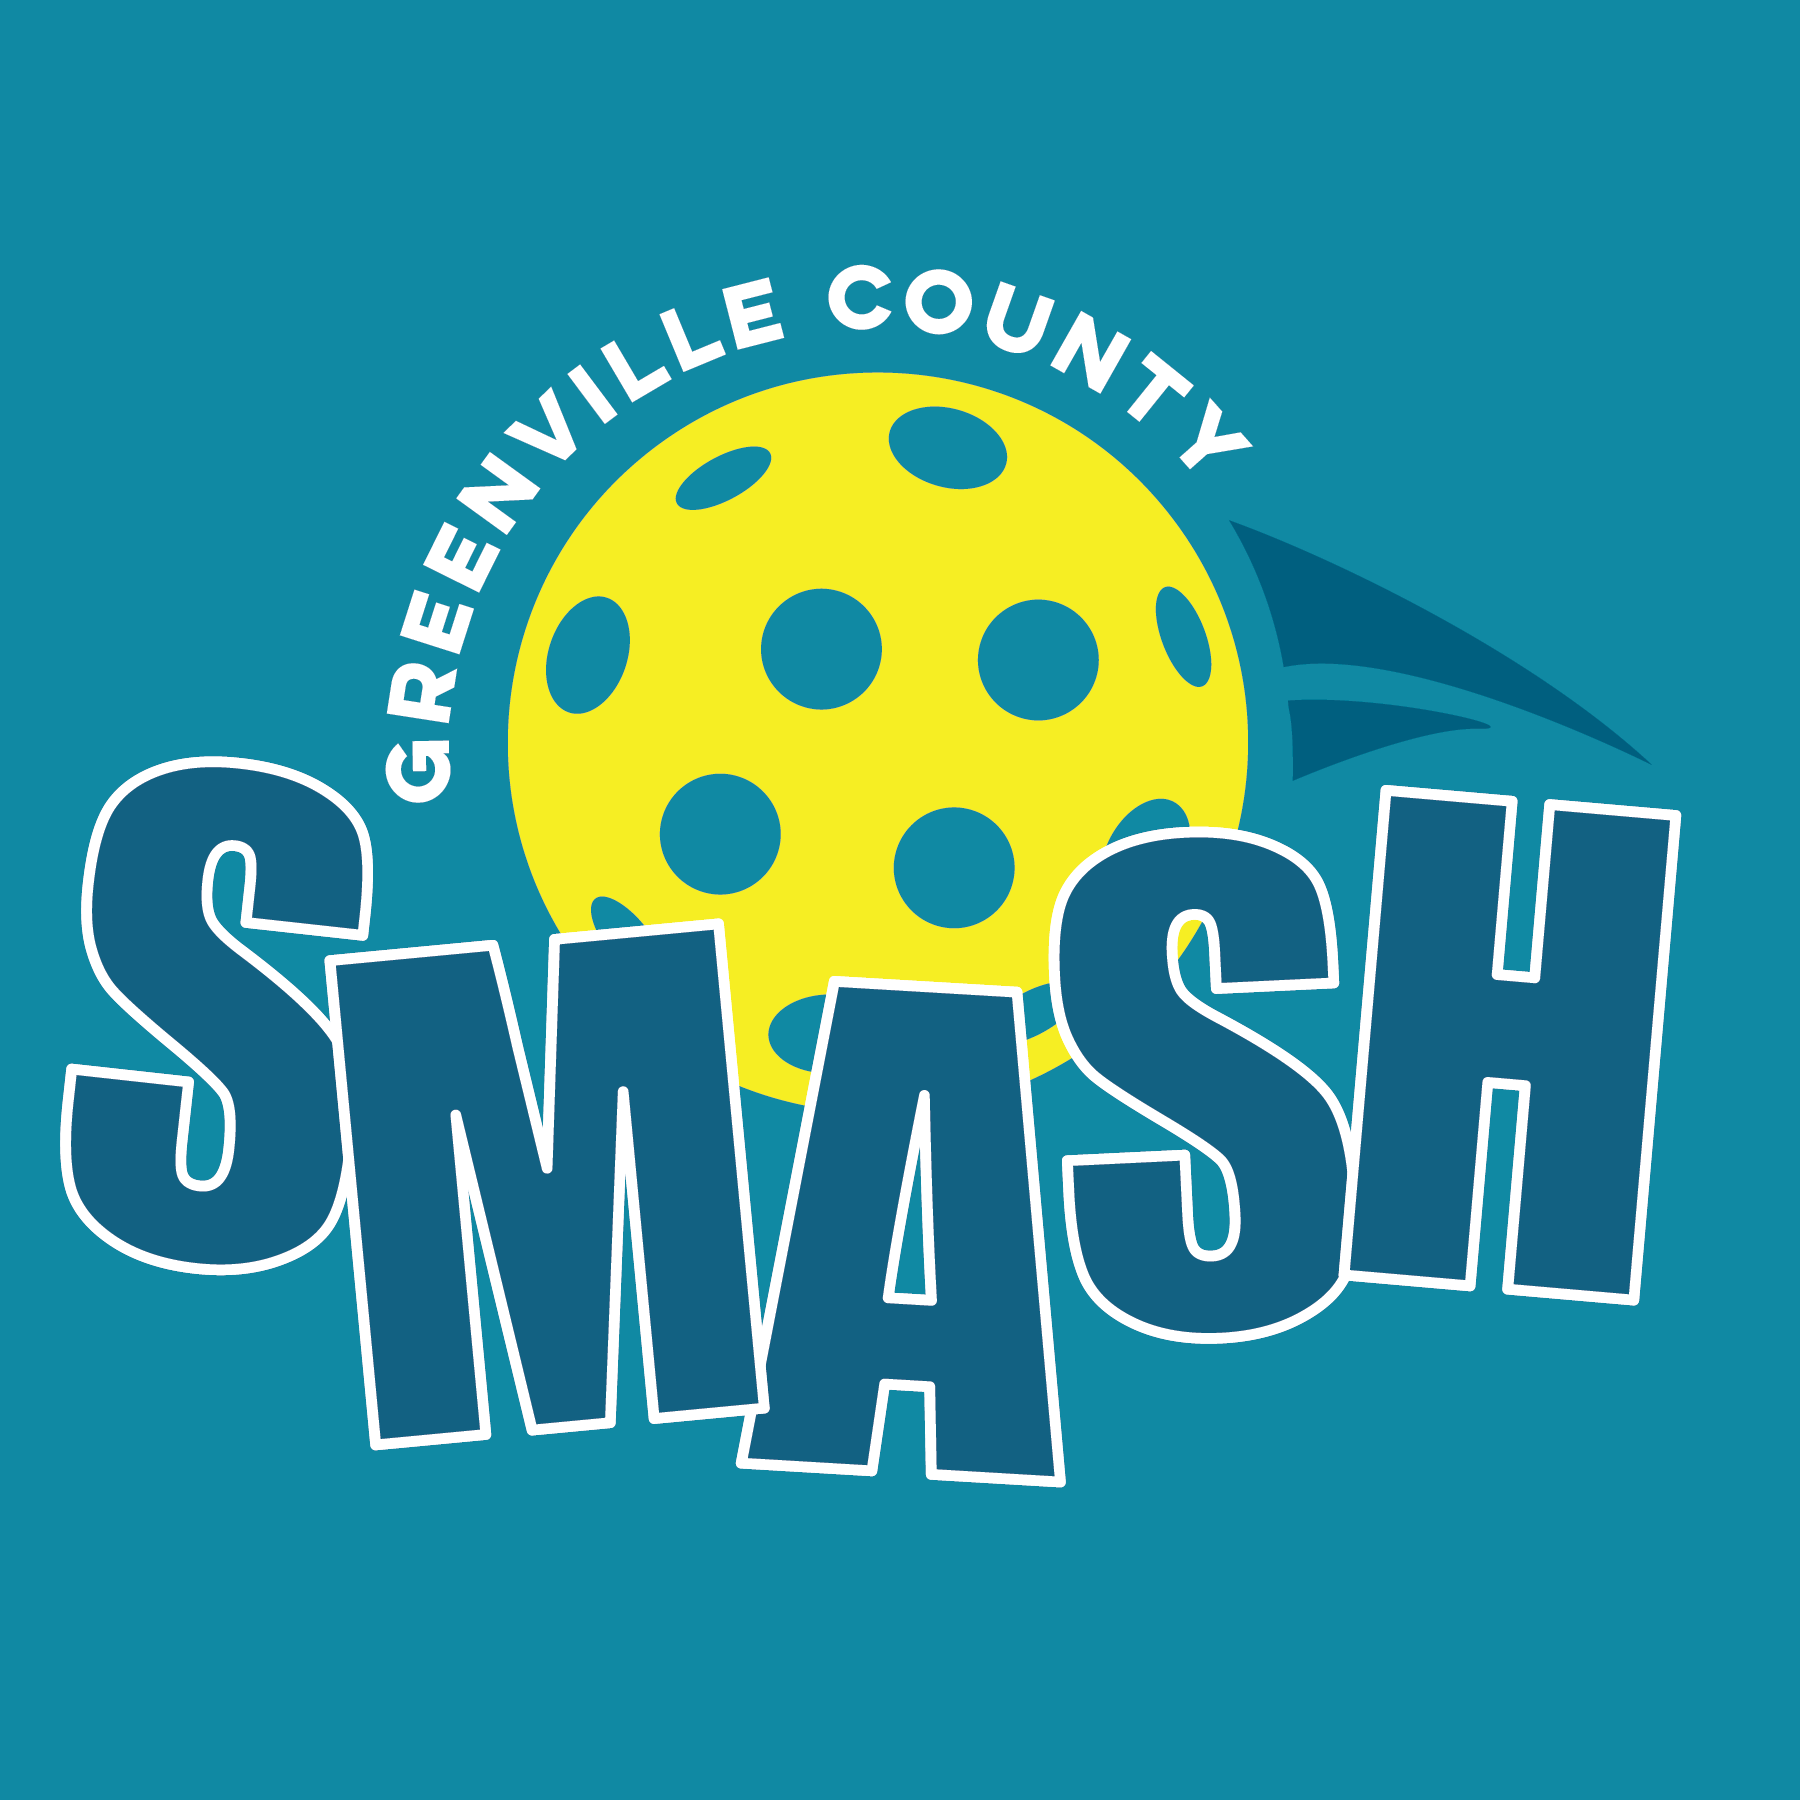 Greenville County Smash Spring 2022 image